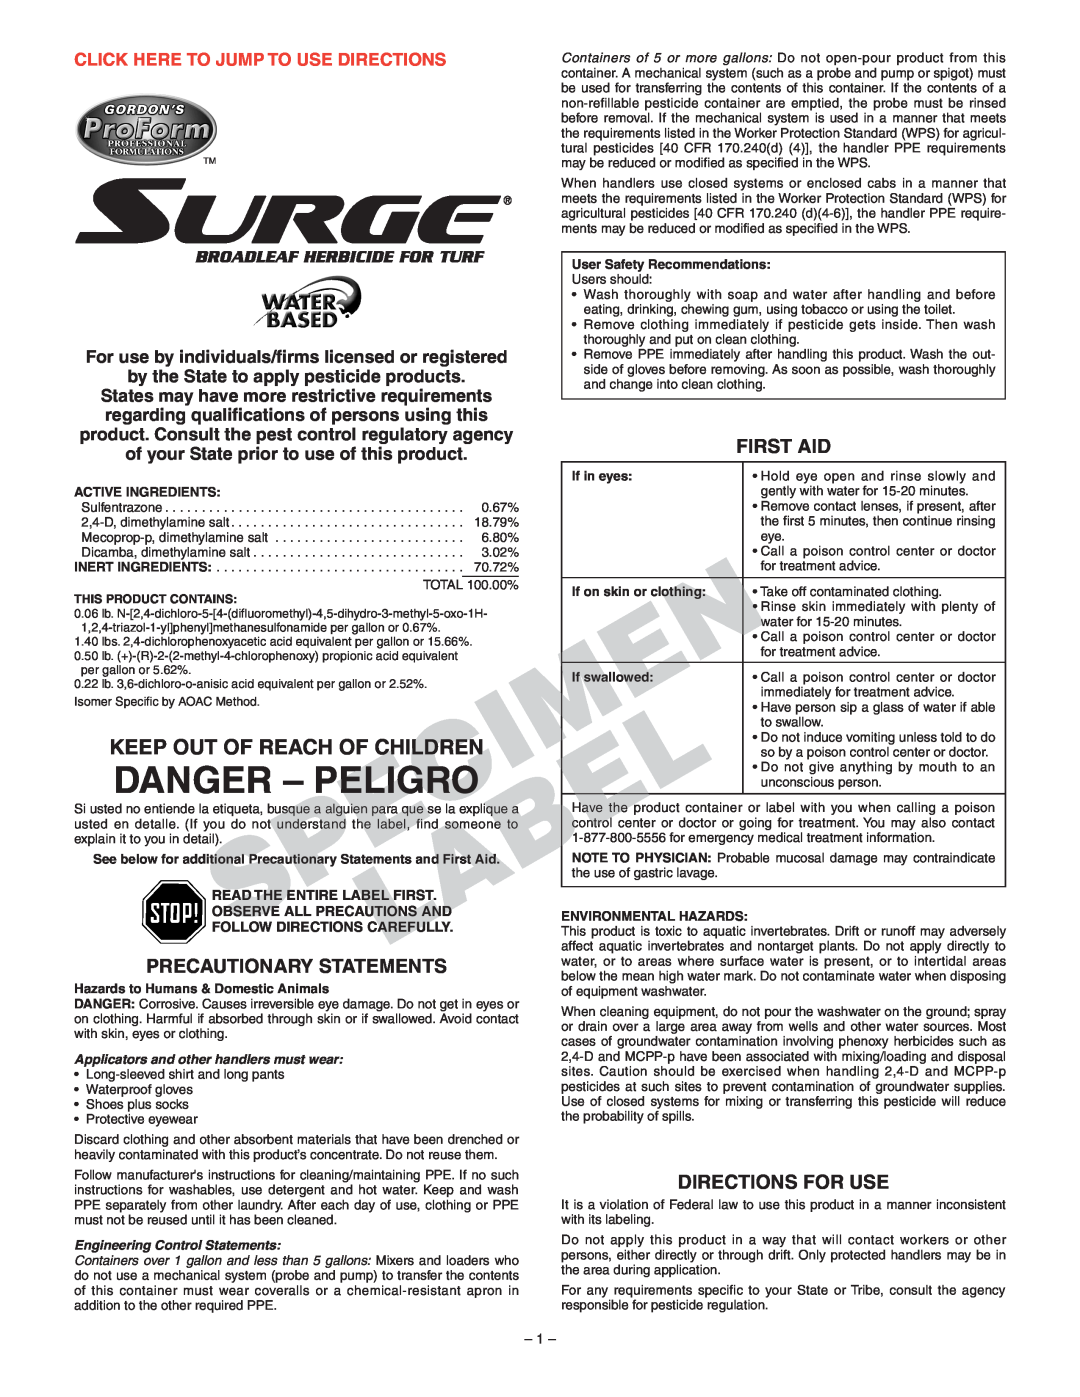 Surge Water Broadleaf Herbicide For Turf manual 